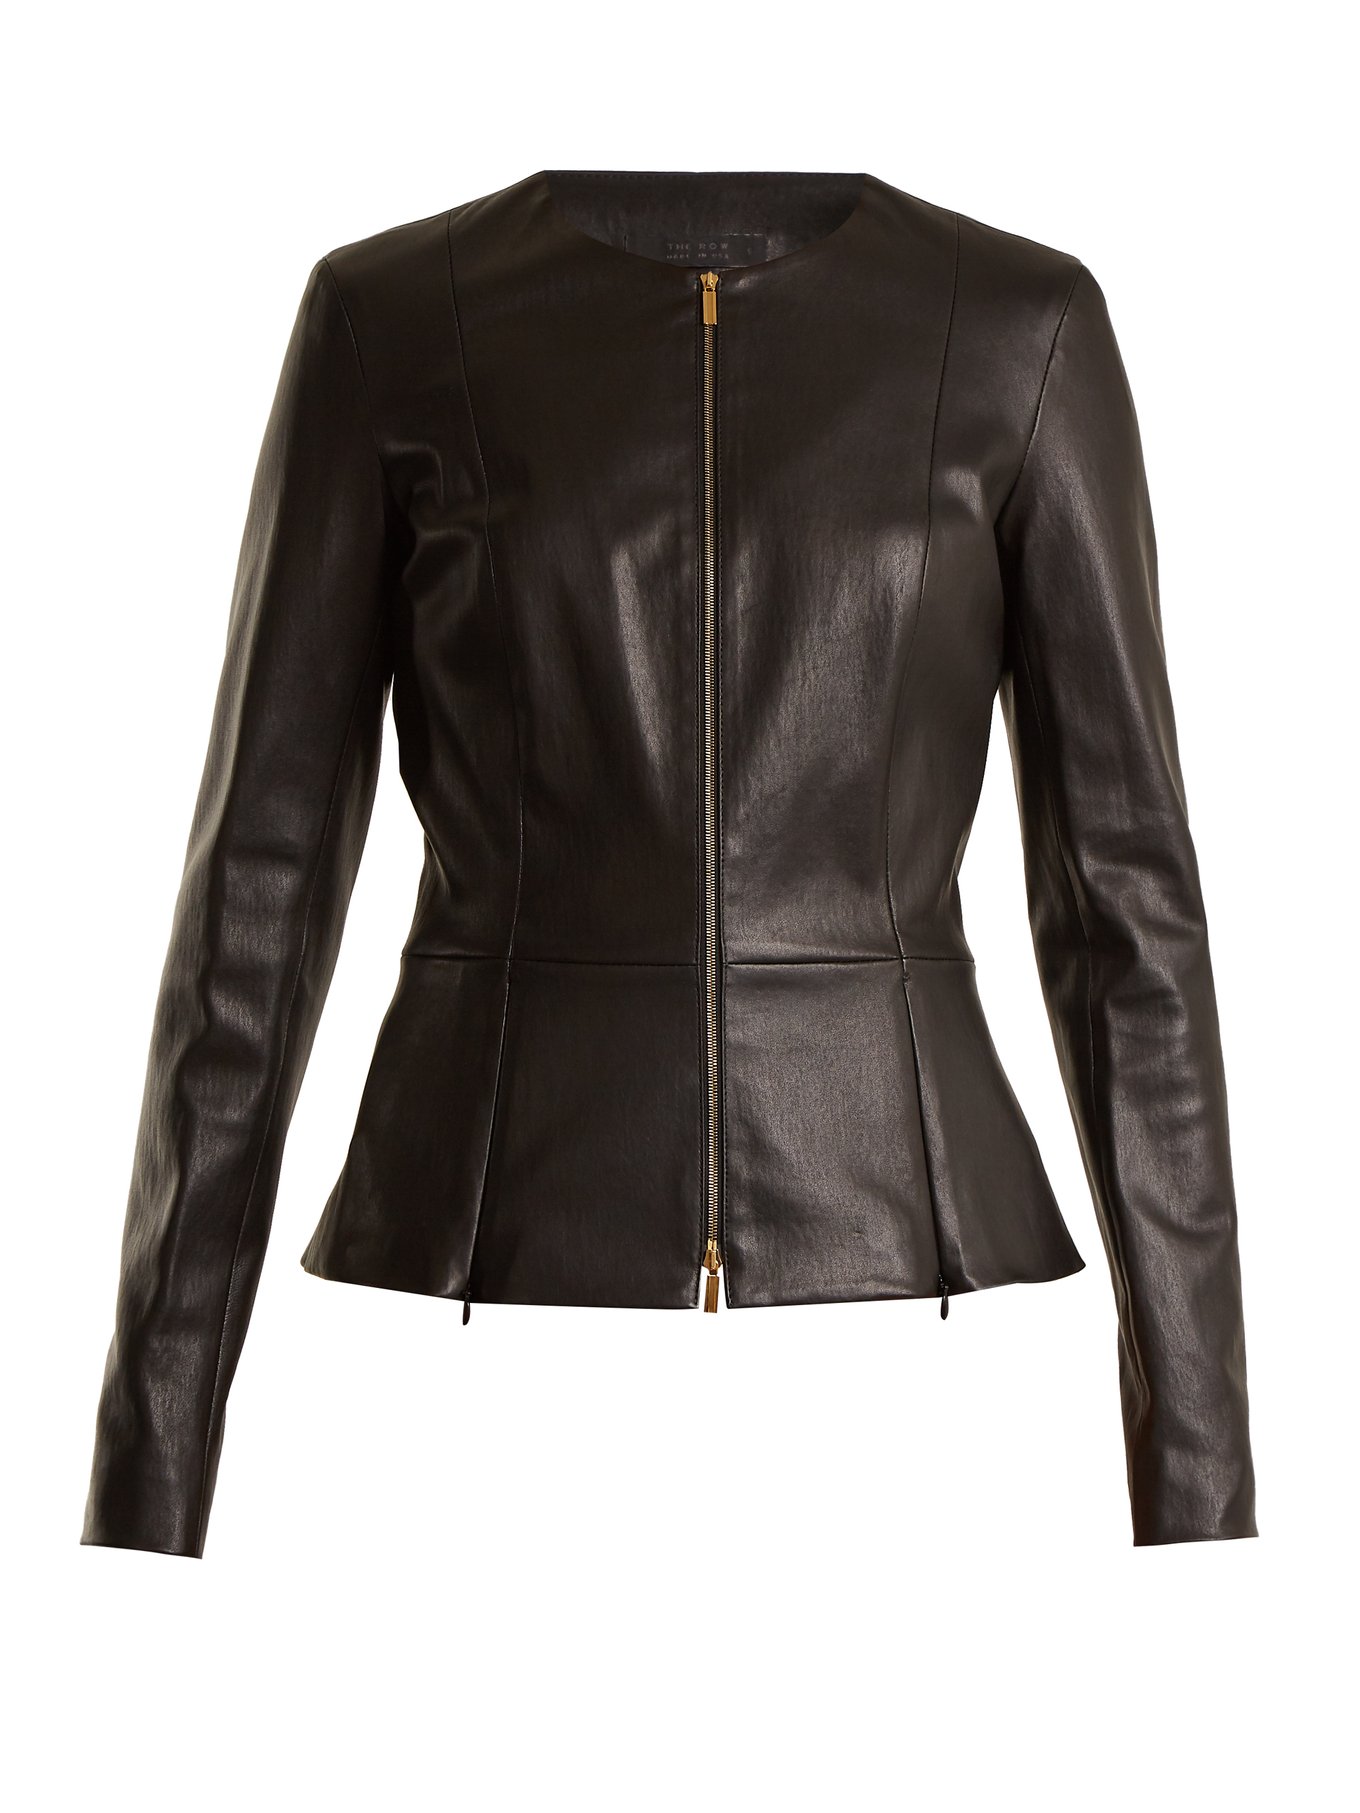 Anaste collarless leather jacket video